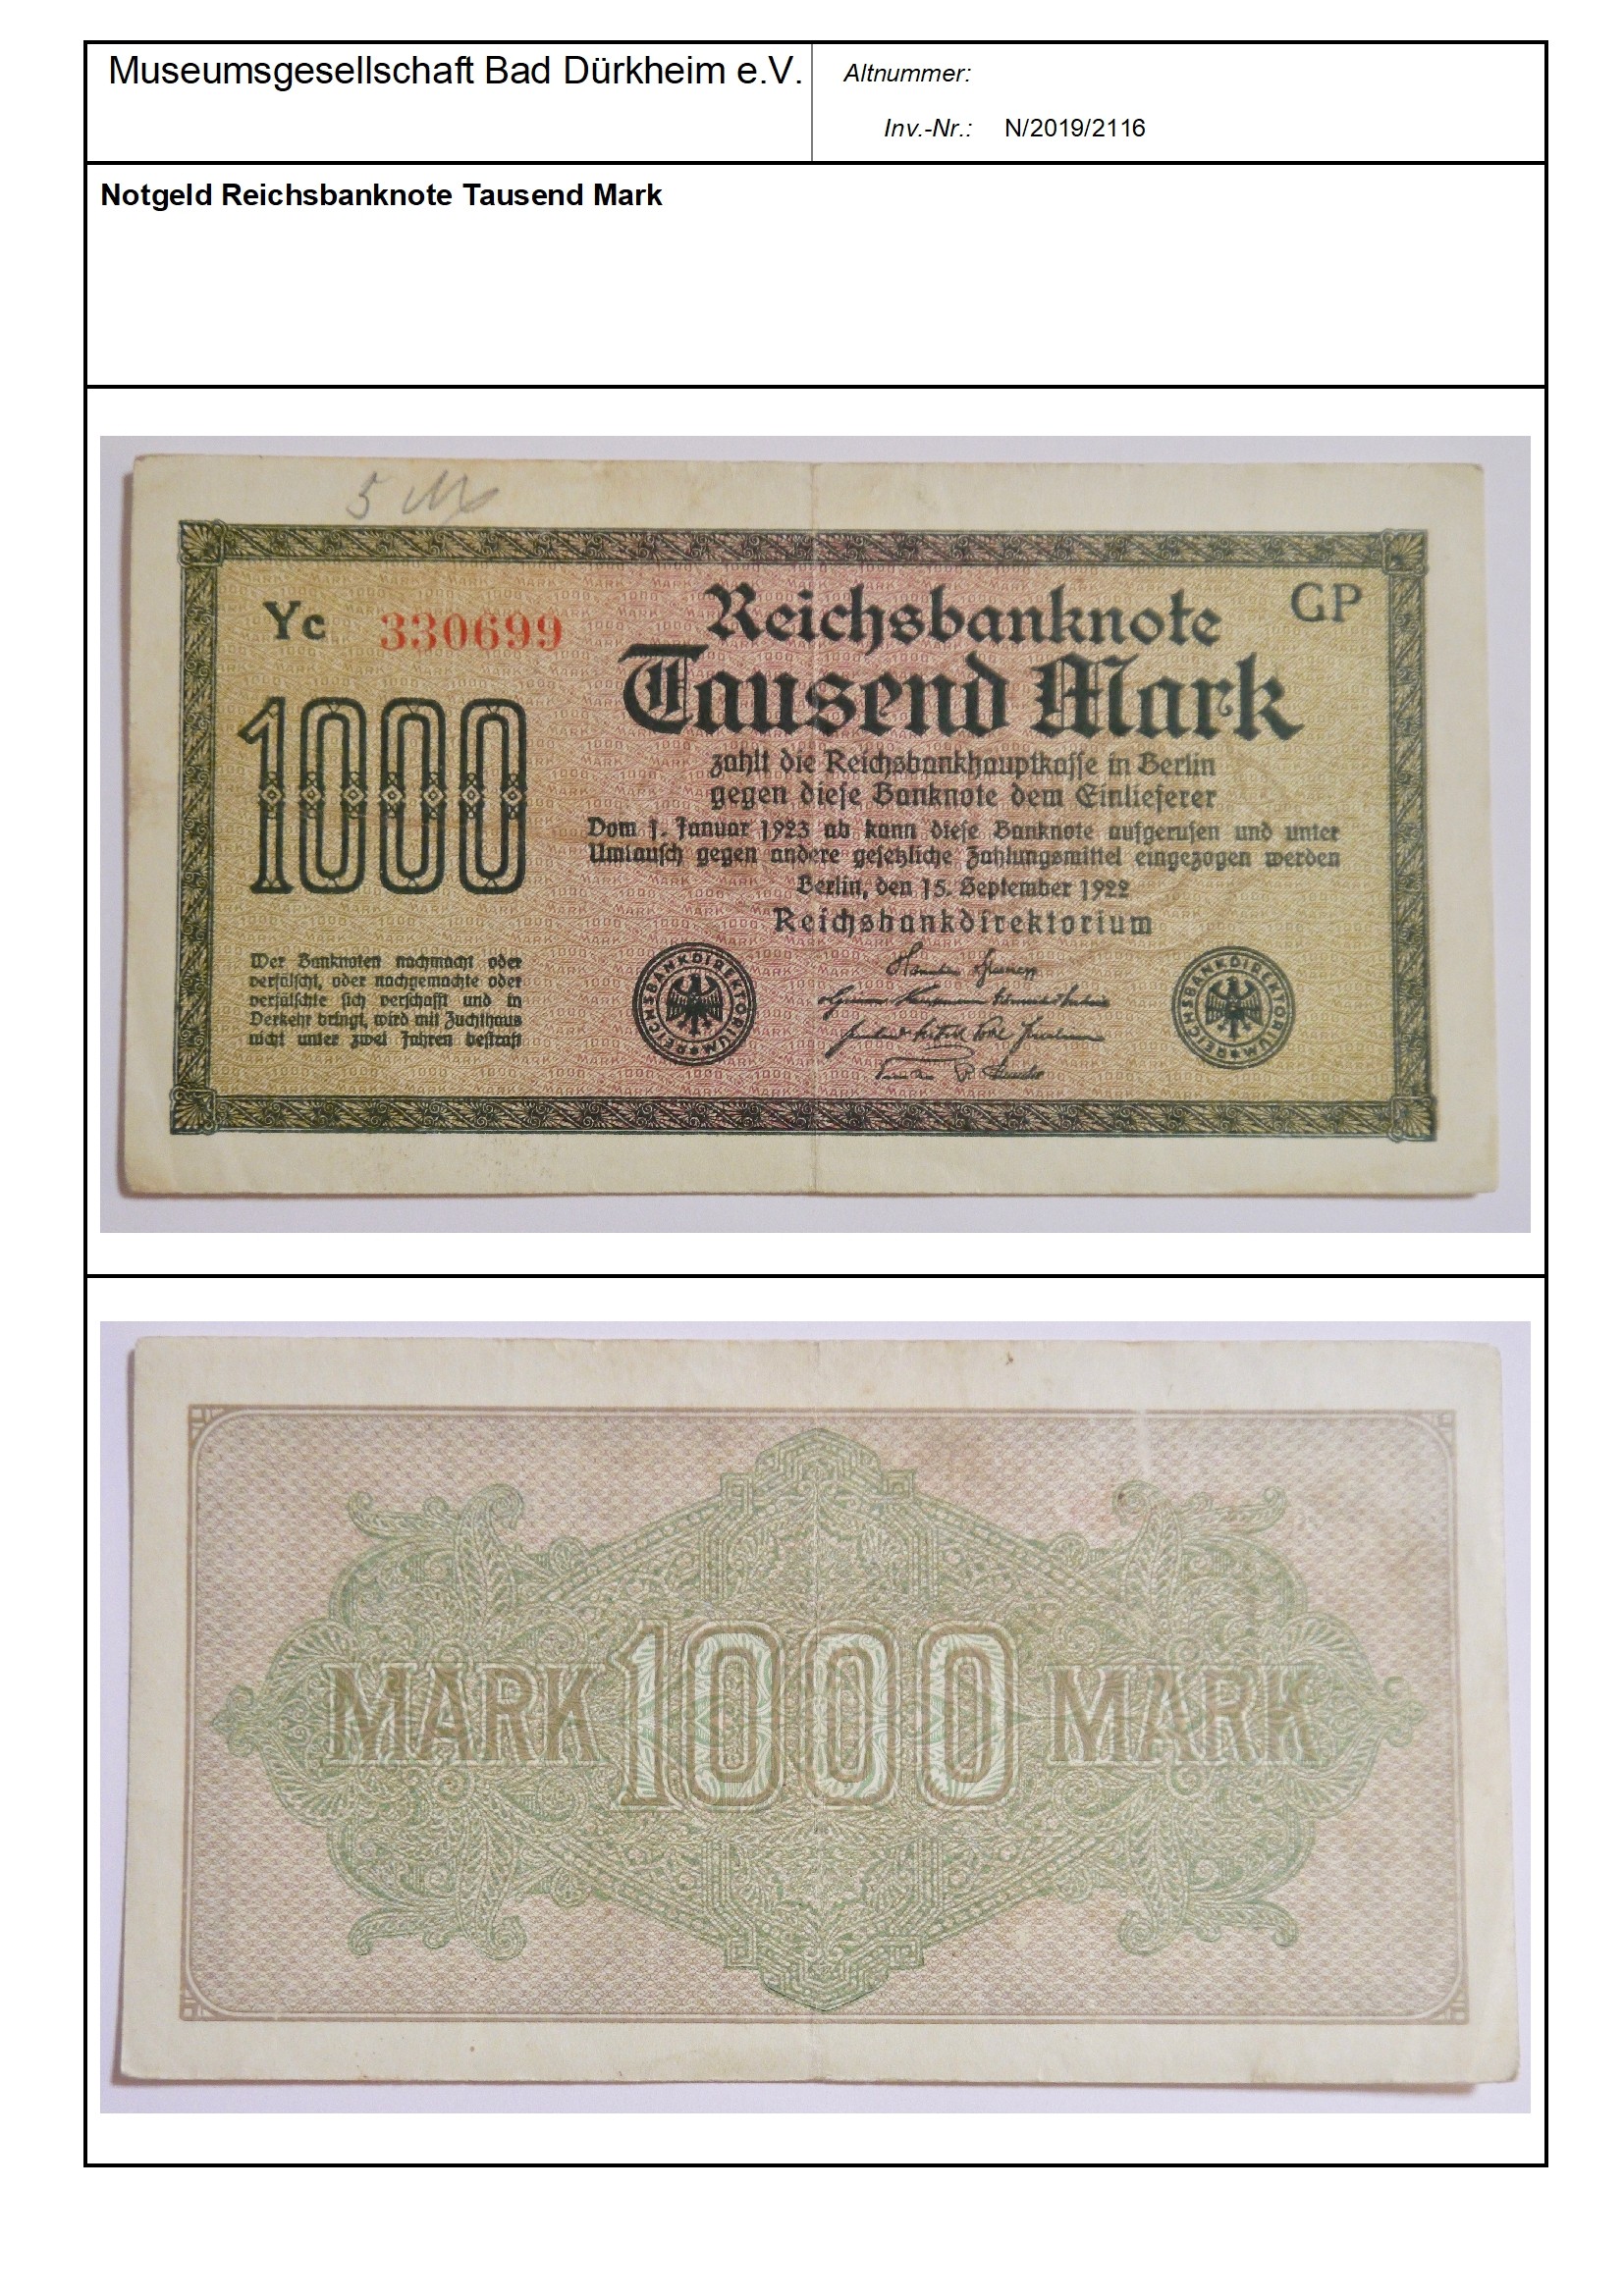 Notgeld Reichsbanknote Tausend Mark
Serien-Nummer: Yc 330699 GP (Museumsgesellschaft Bad Dürkheim e.V. CC BY-NC-SA)